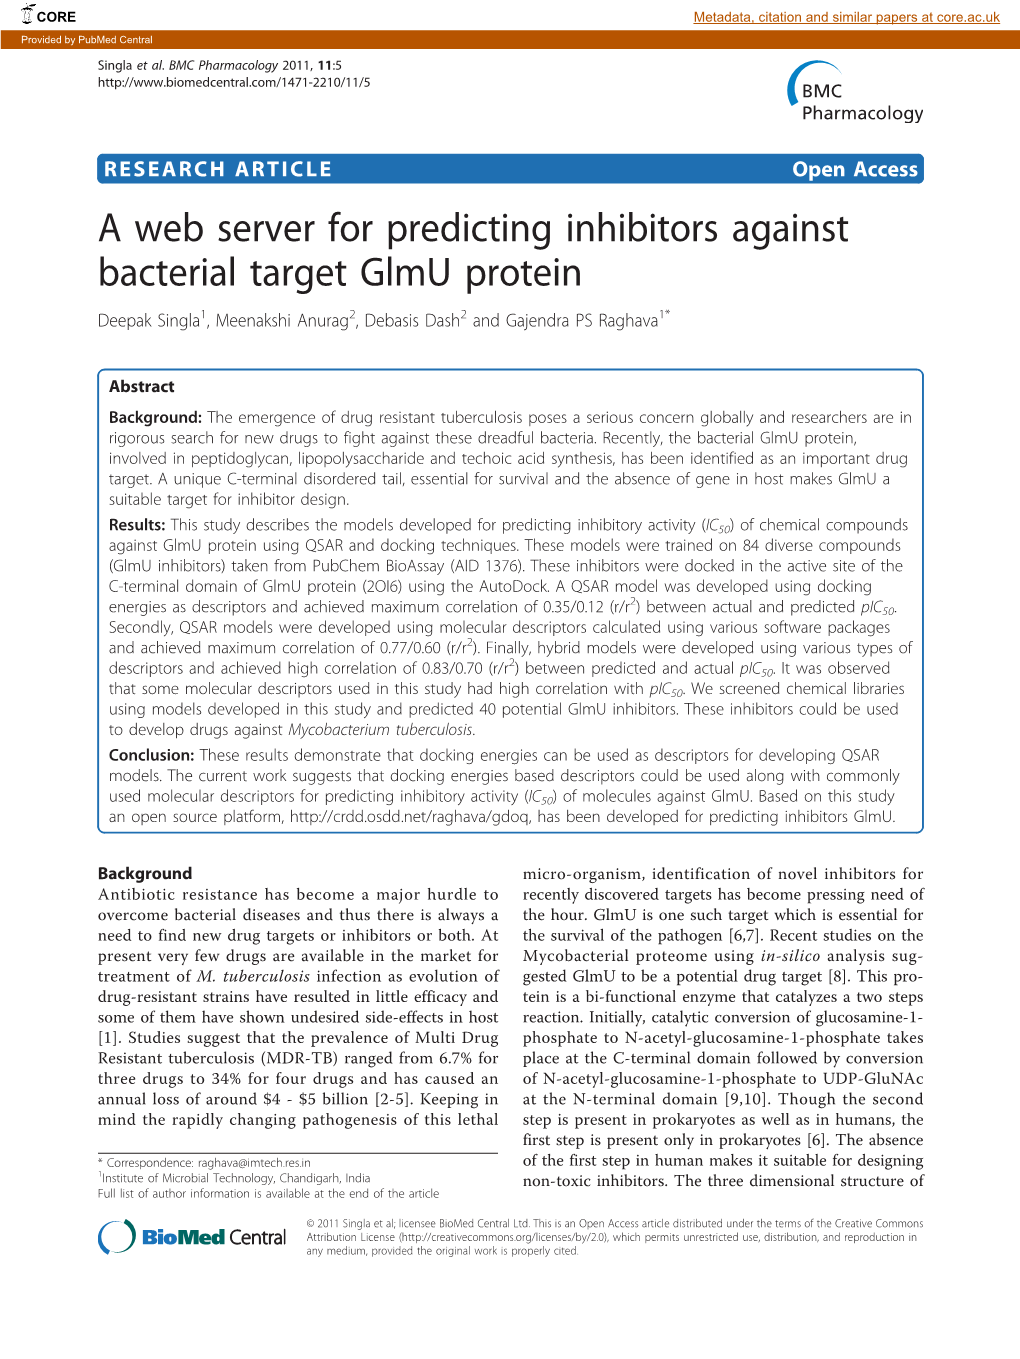 A Web Server for Predicting Inhibitors Against Bacterial Target Glmu Protein Deepak Singla1, Meenakshi Anurag2, Debasis Dash2 and Gajendra PS Raghava1*